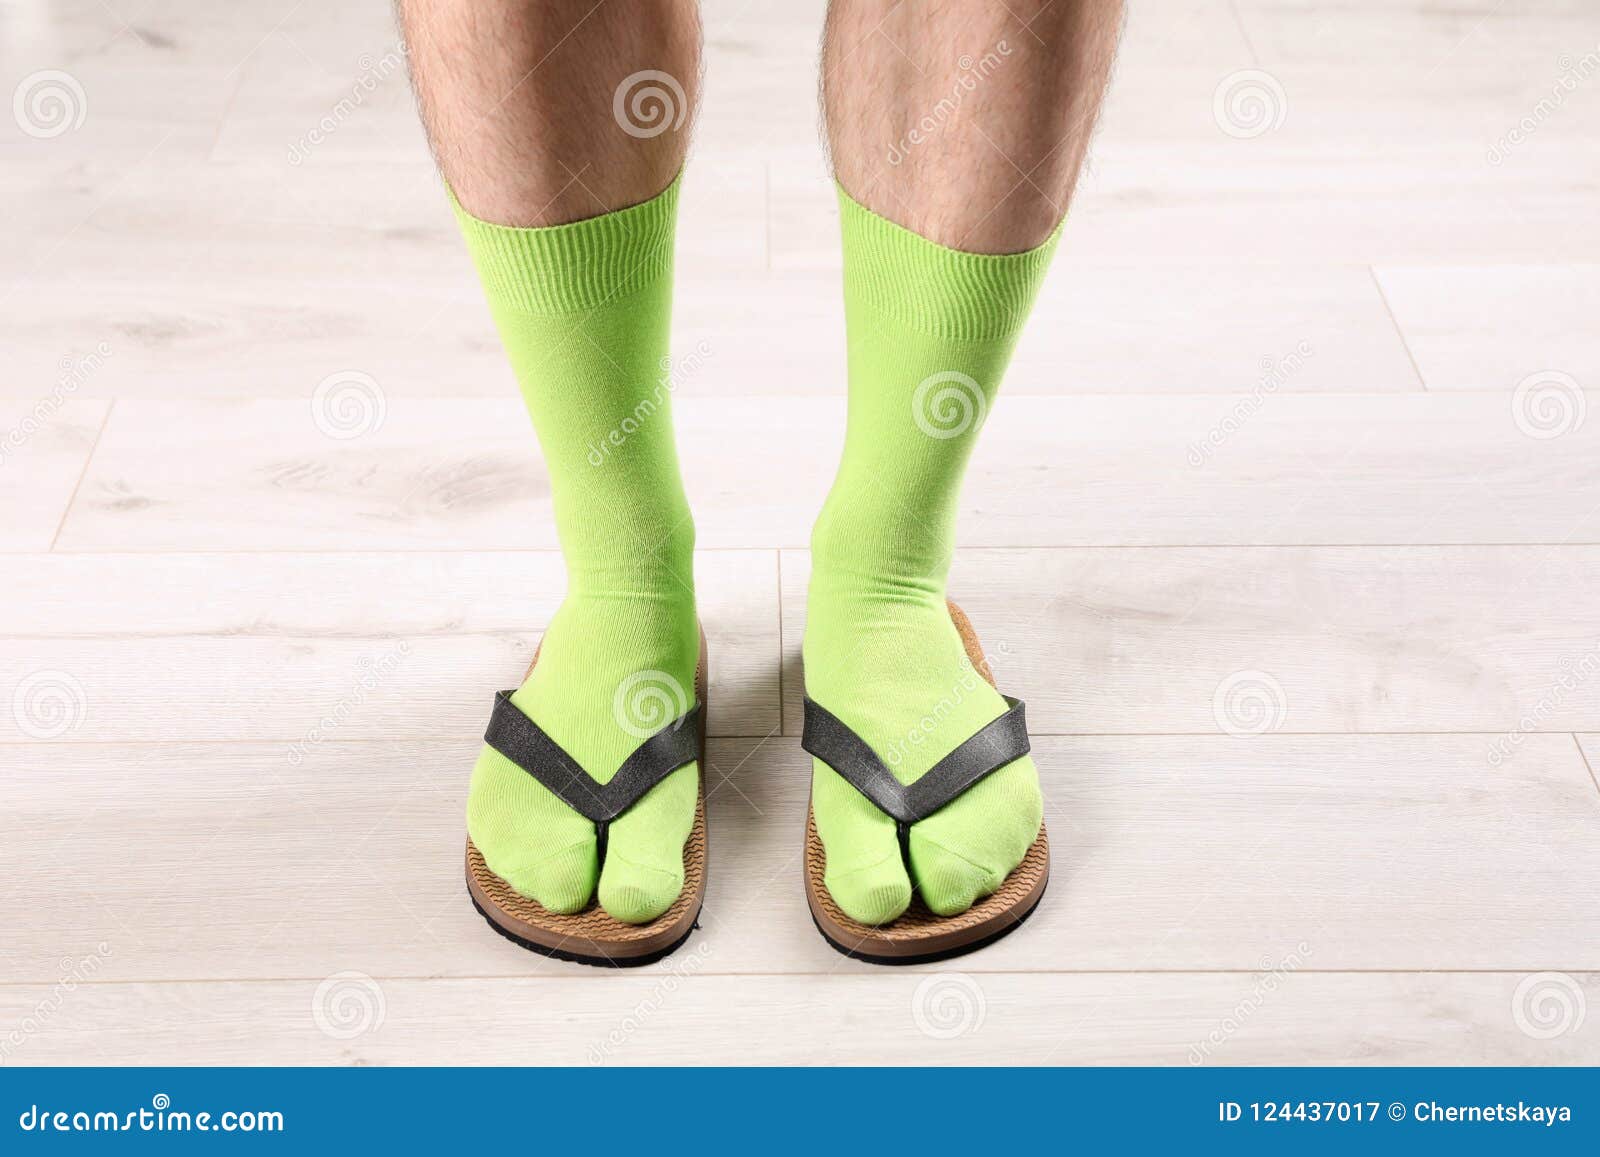 in Socks Slippers on Floor - Image of sandals, naff: 124437017